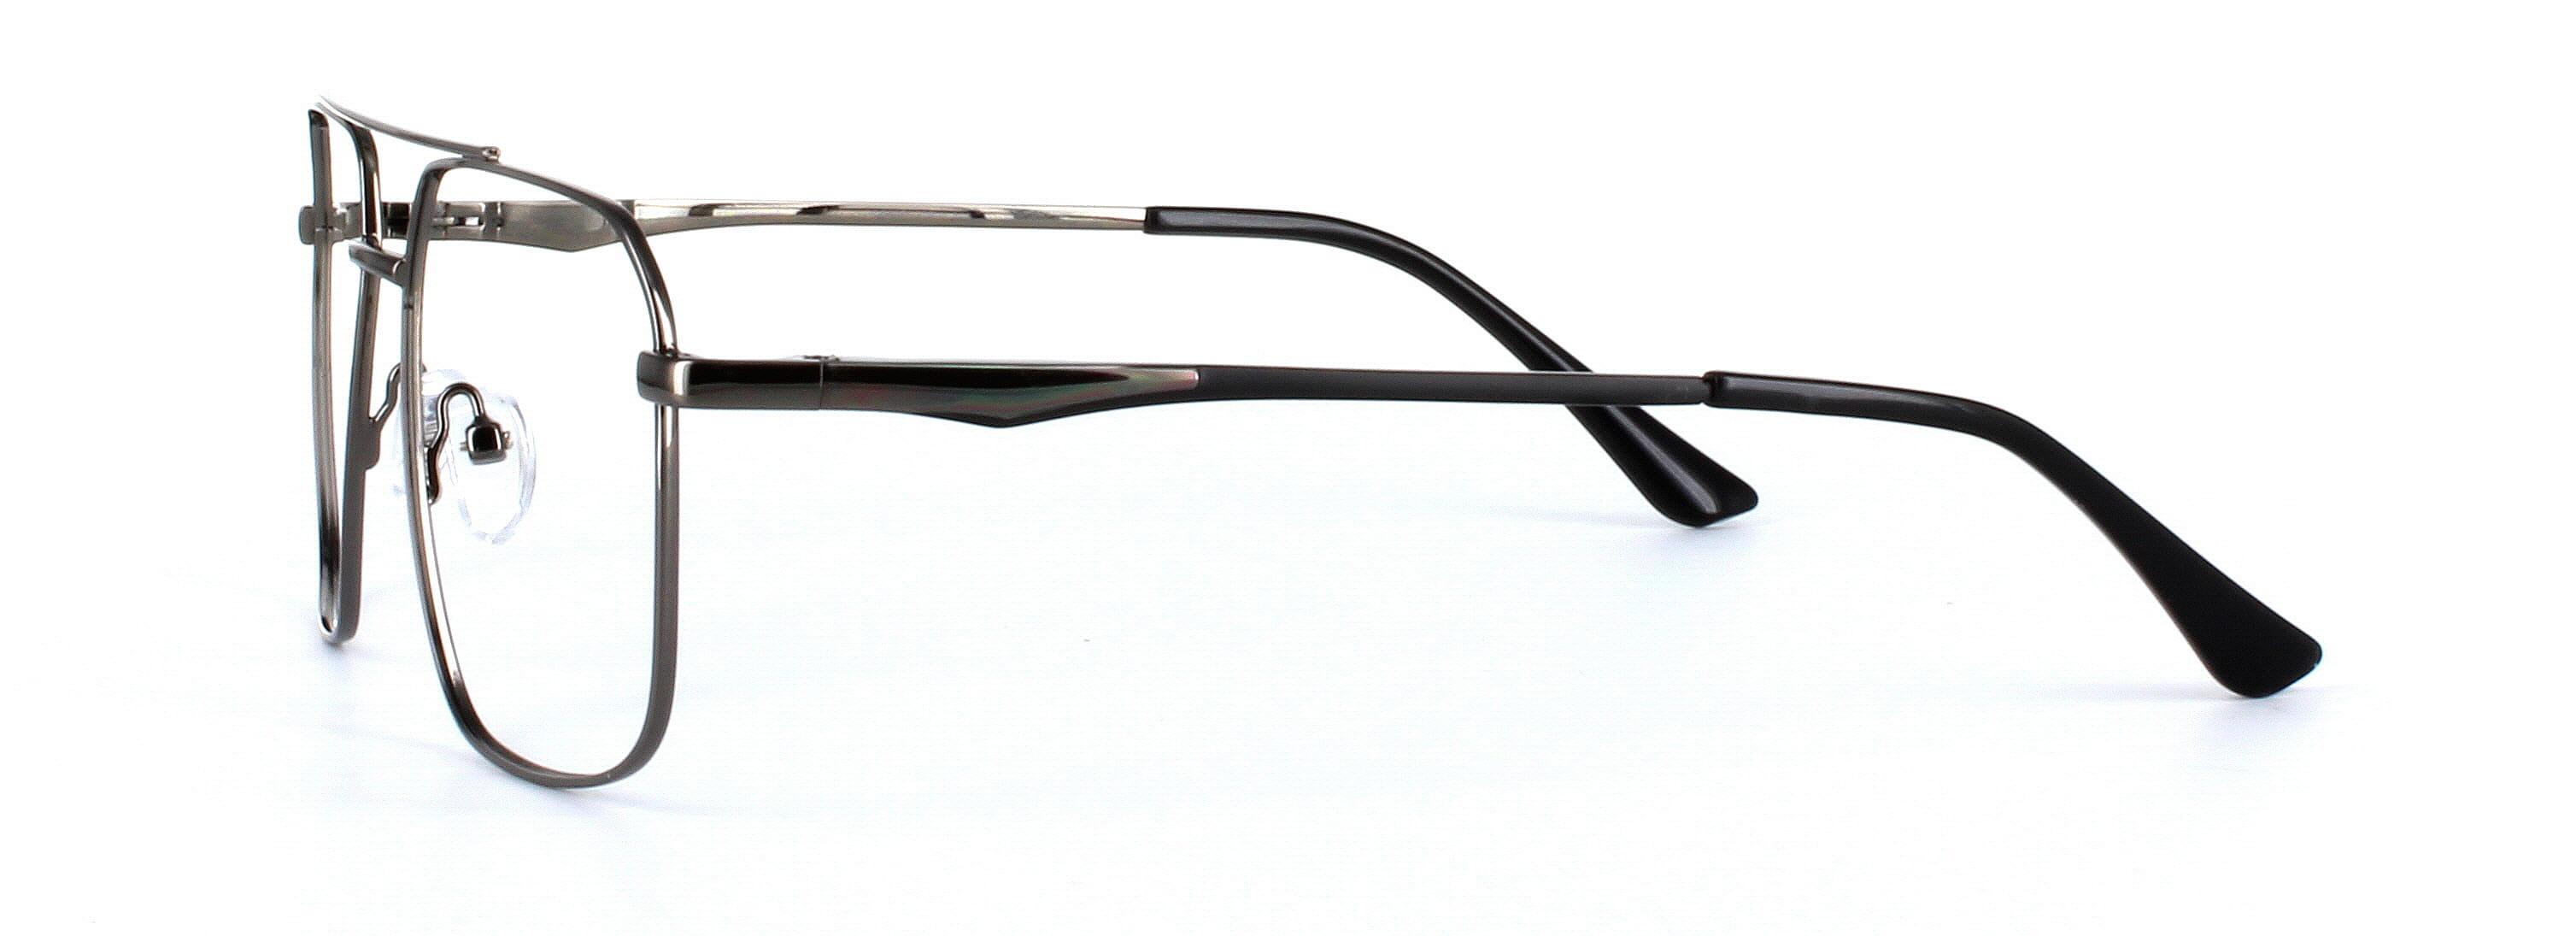 Caludon - Gunmetal aviator gents glasses - image 2